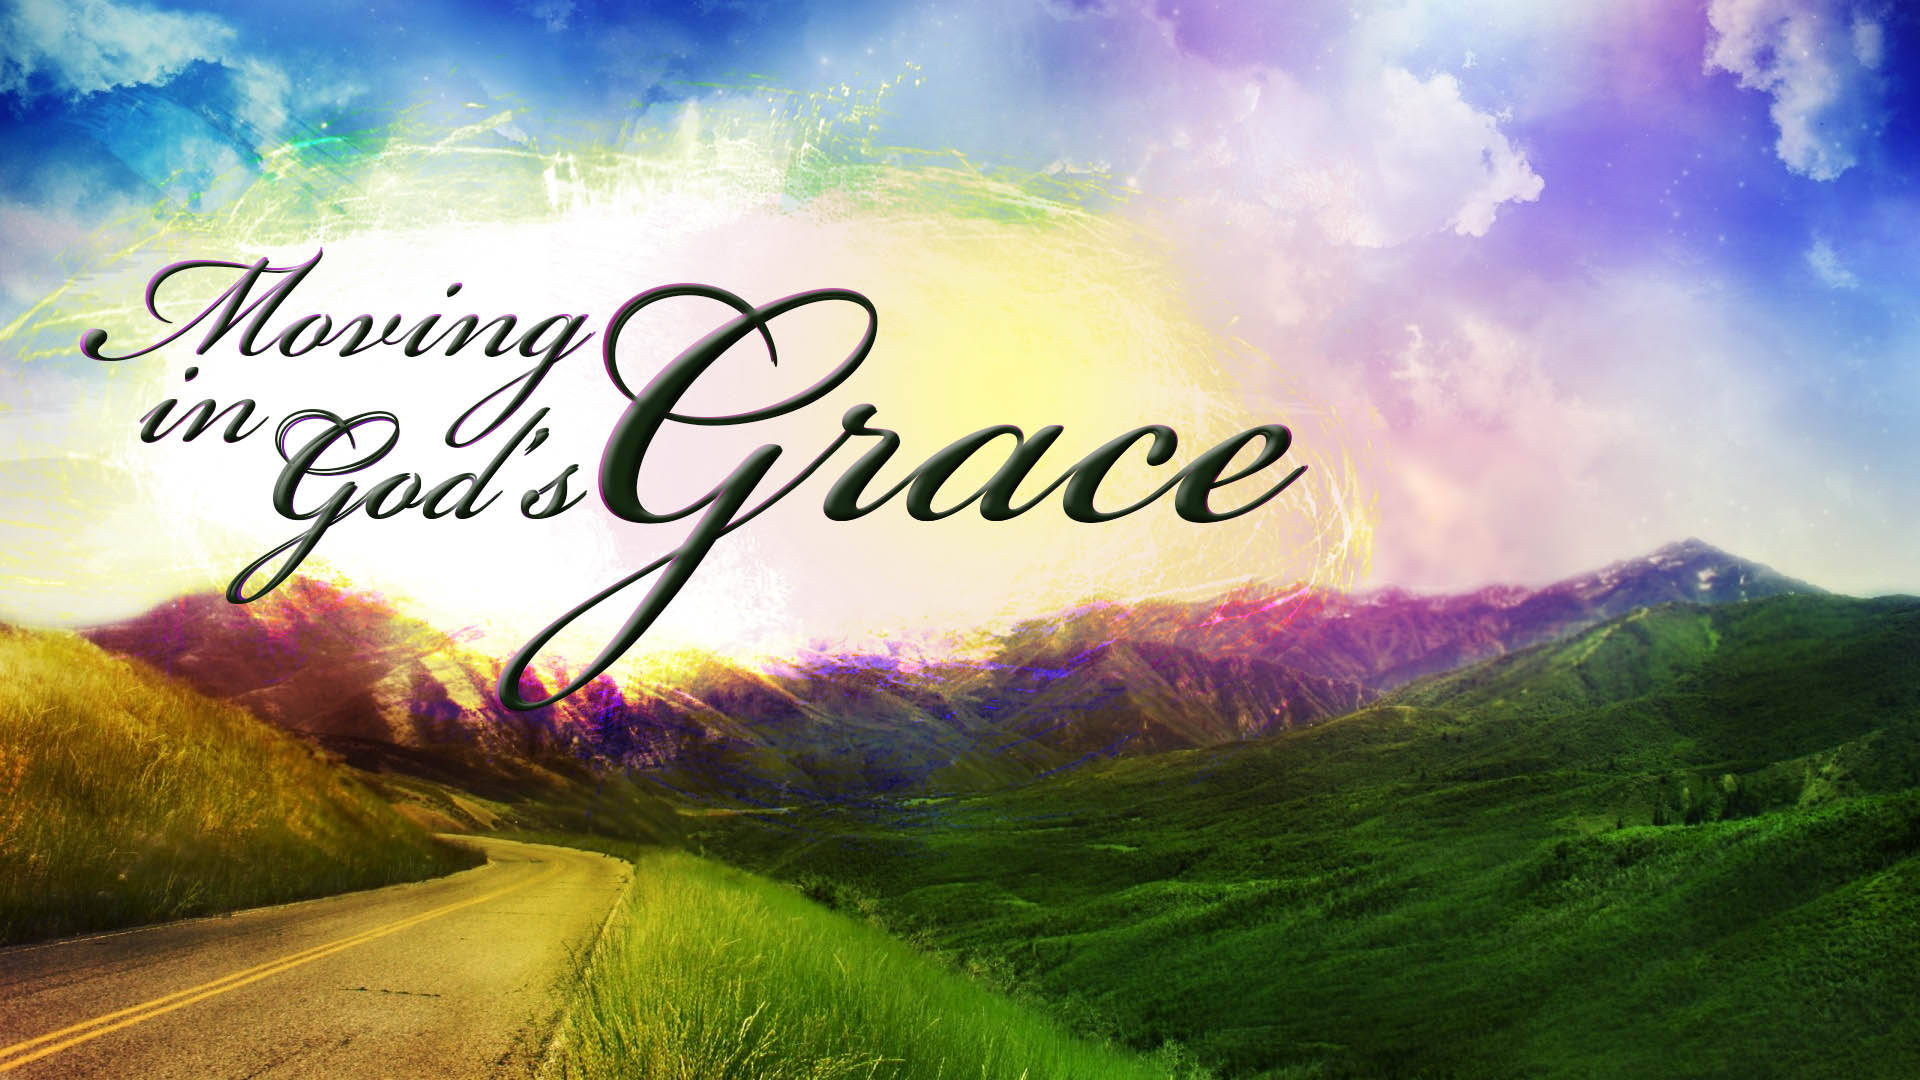 God's Grace Quotes Wallpaper